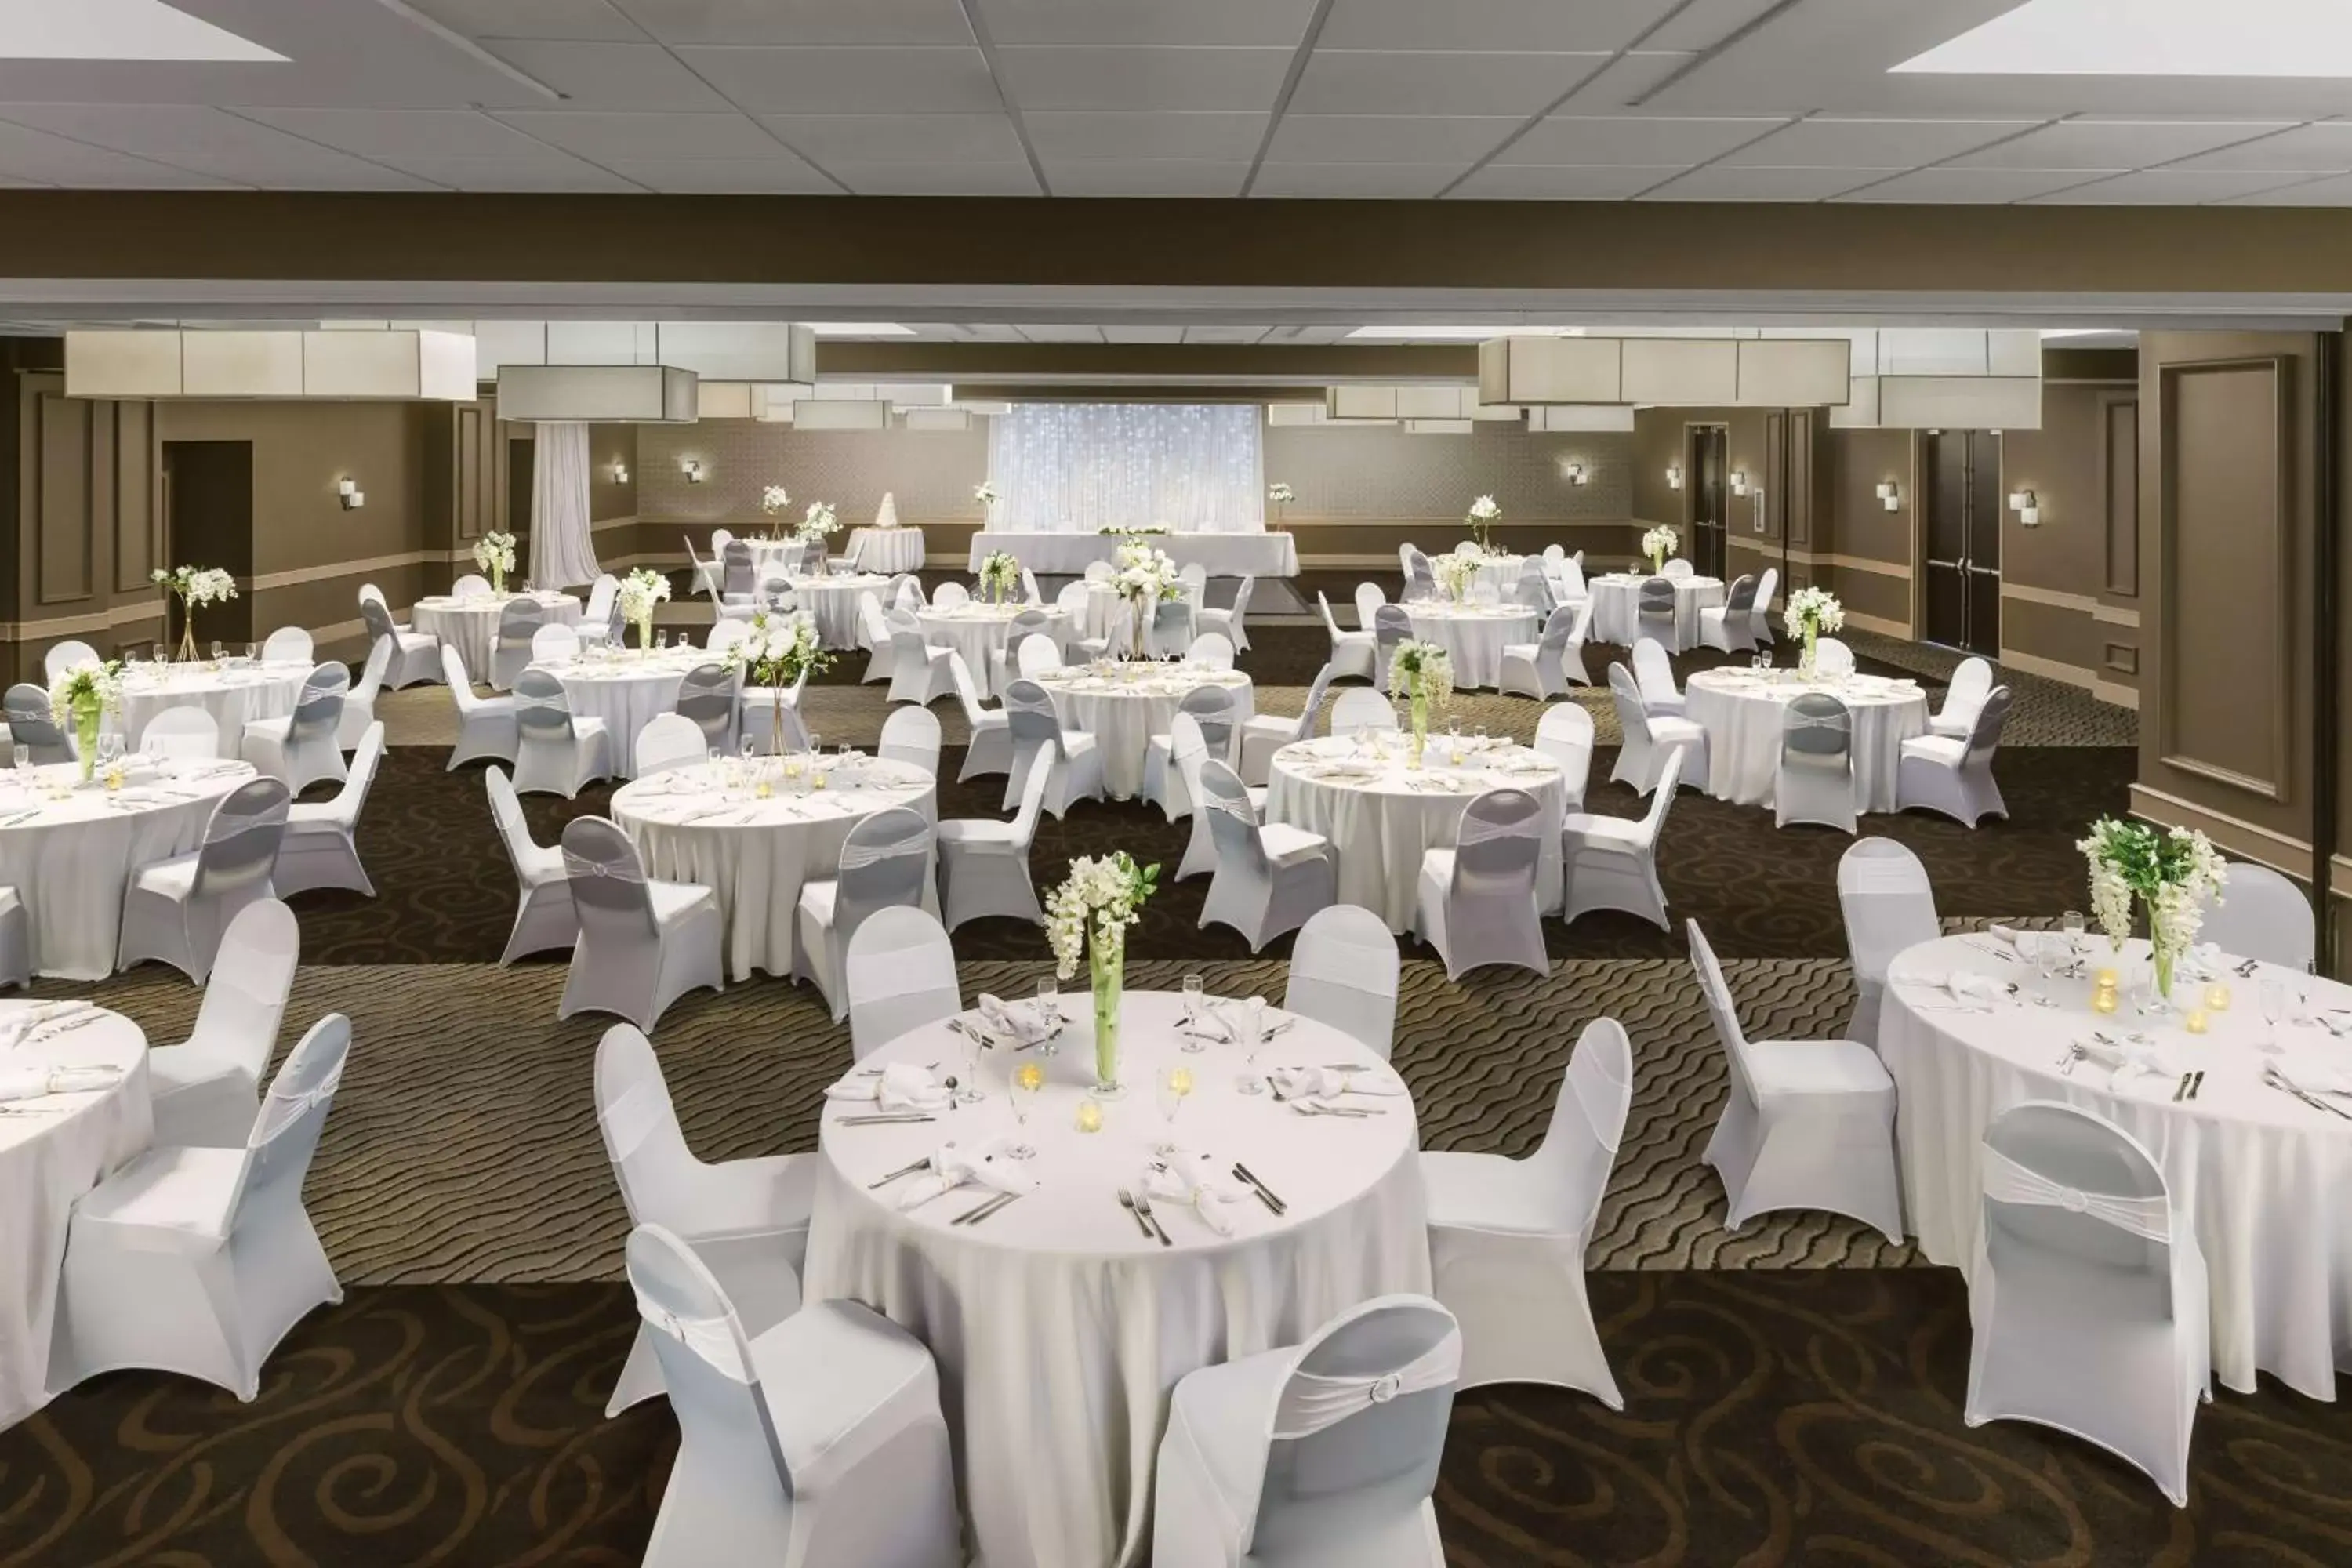 Meeting/conference room, Banquet Facilities in Hilton Garden Inn Cocoa Beach-Oceanfront, FL